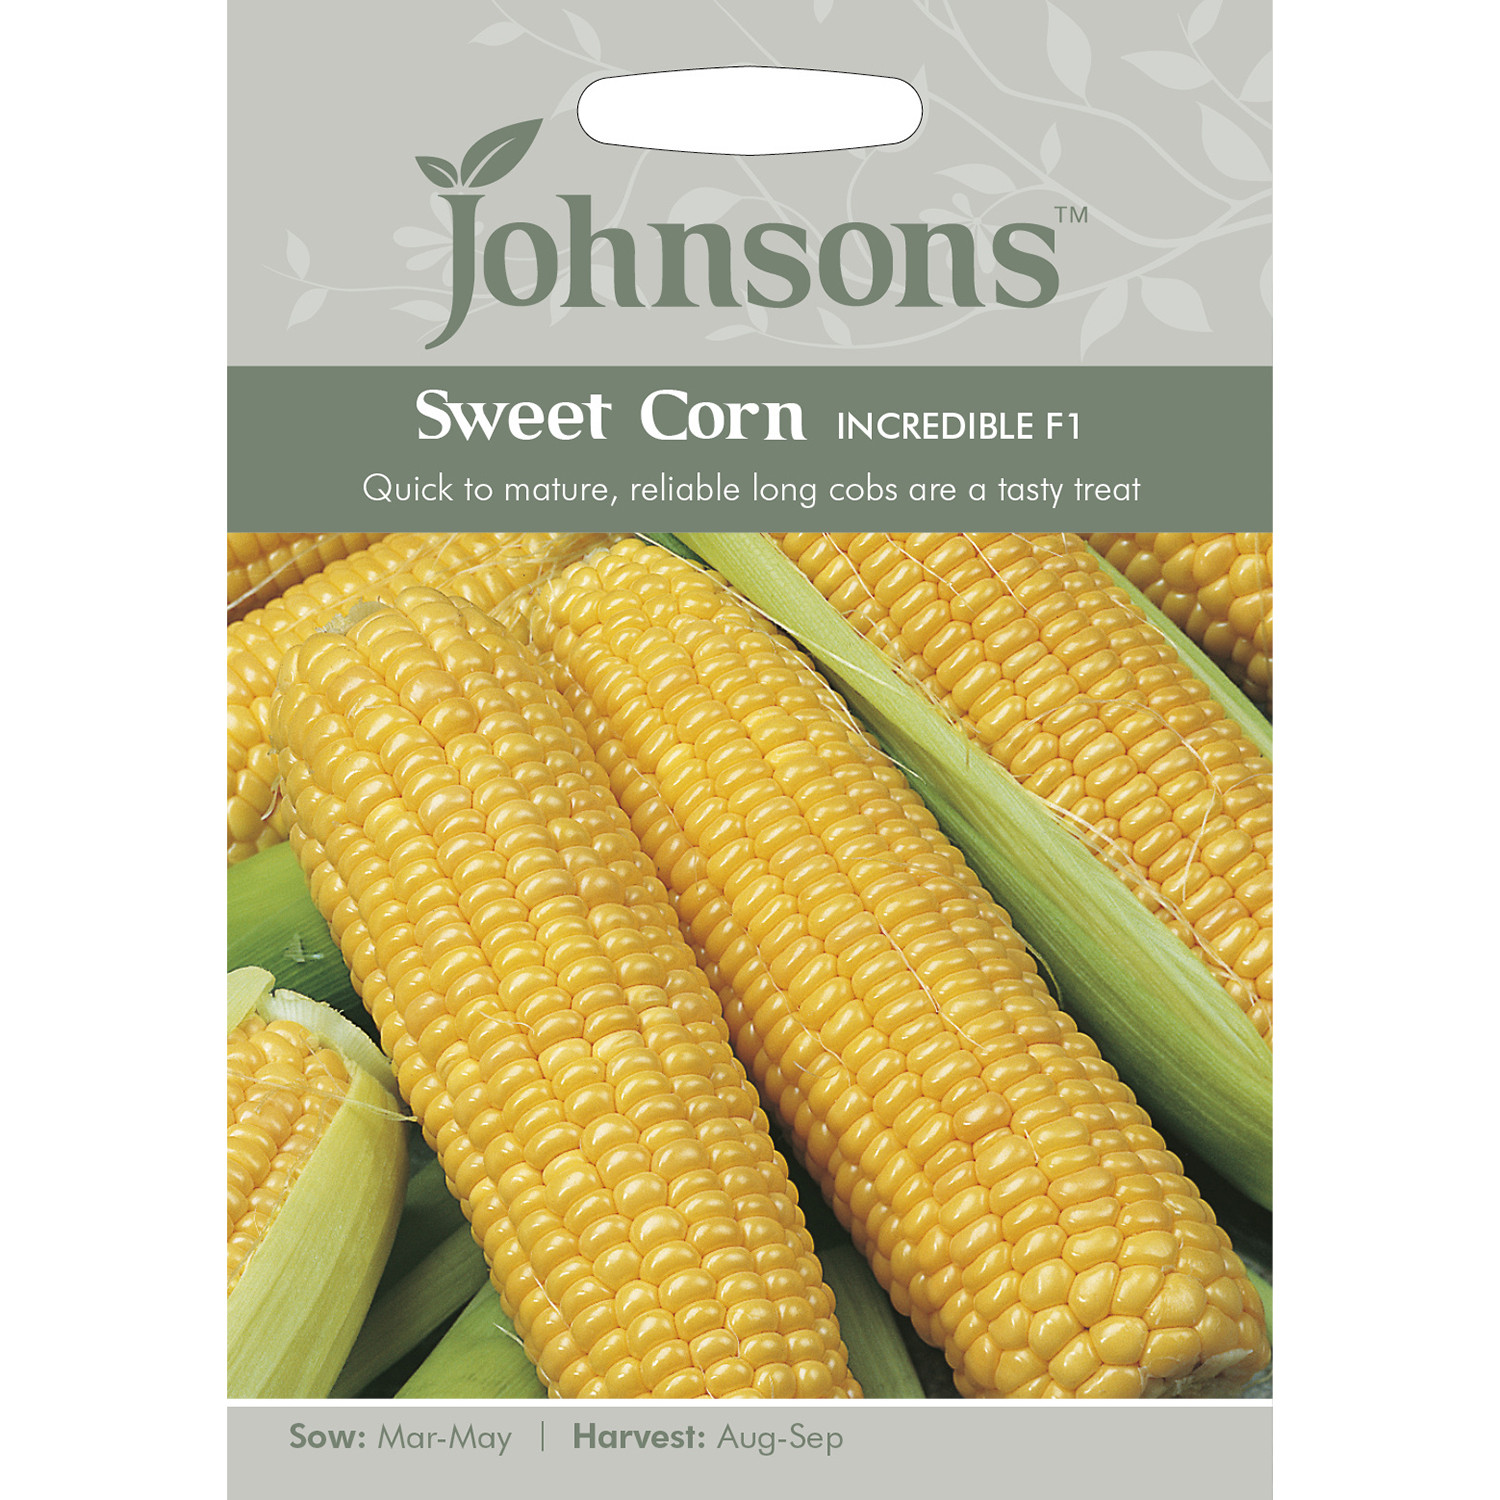 Johnsons Incredible F1 Sweet Corn Seeds Image 2